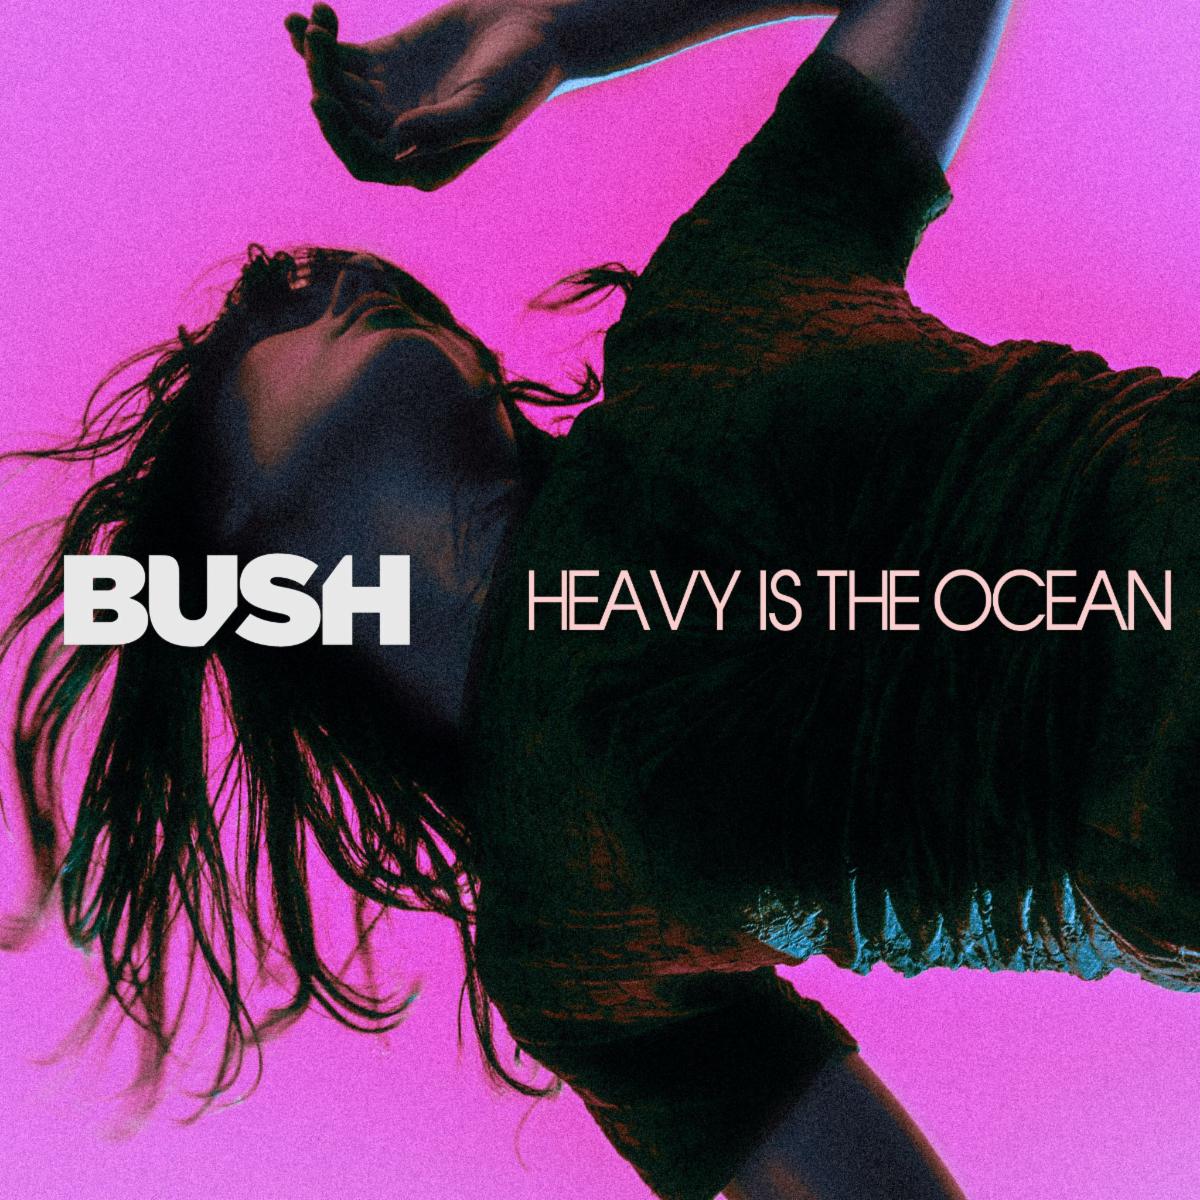 Bush Encourages Uninhibited Love In Latest Single "Heavy Is the Ocean"